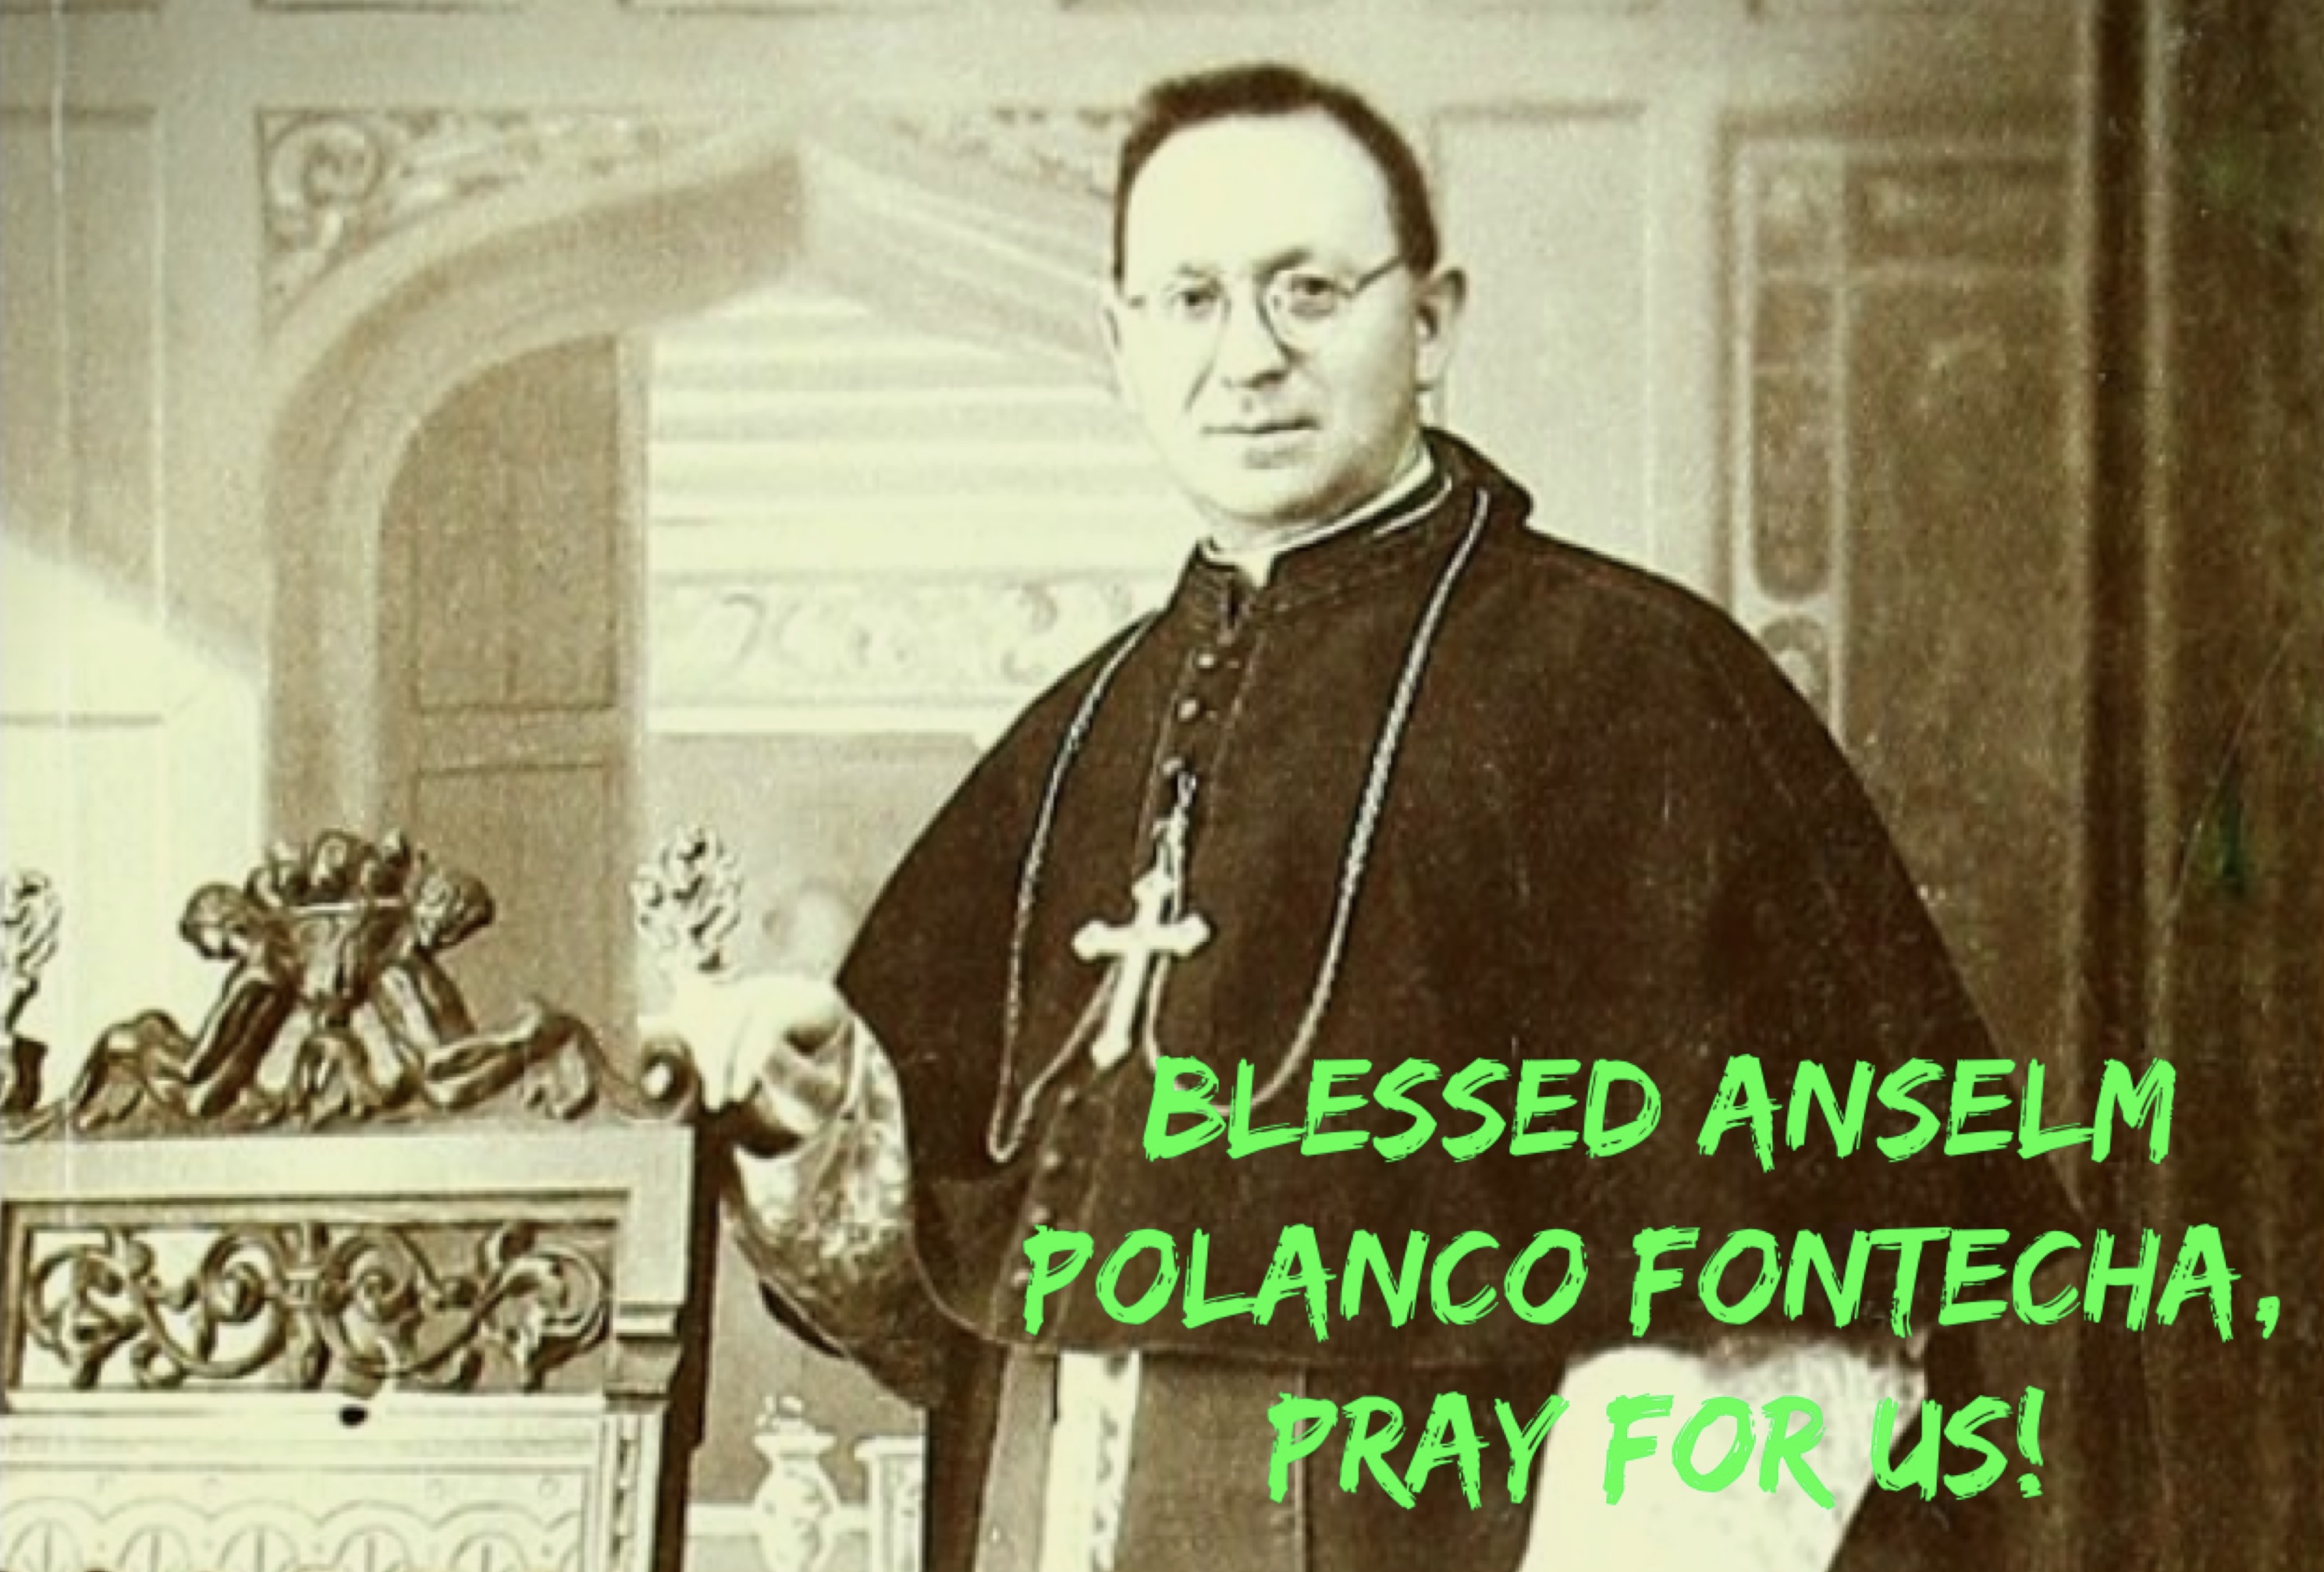 7th February - Blessed Anselm Polanco Fontecha